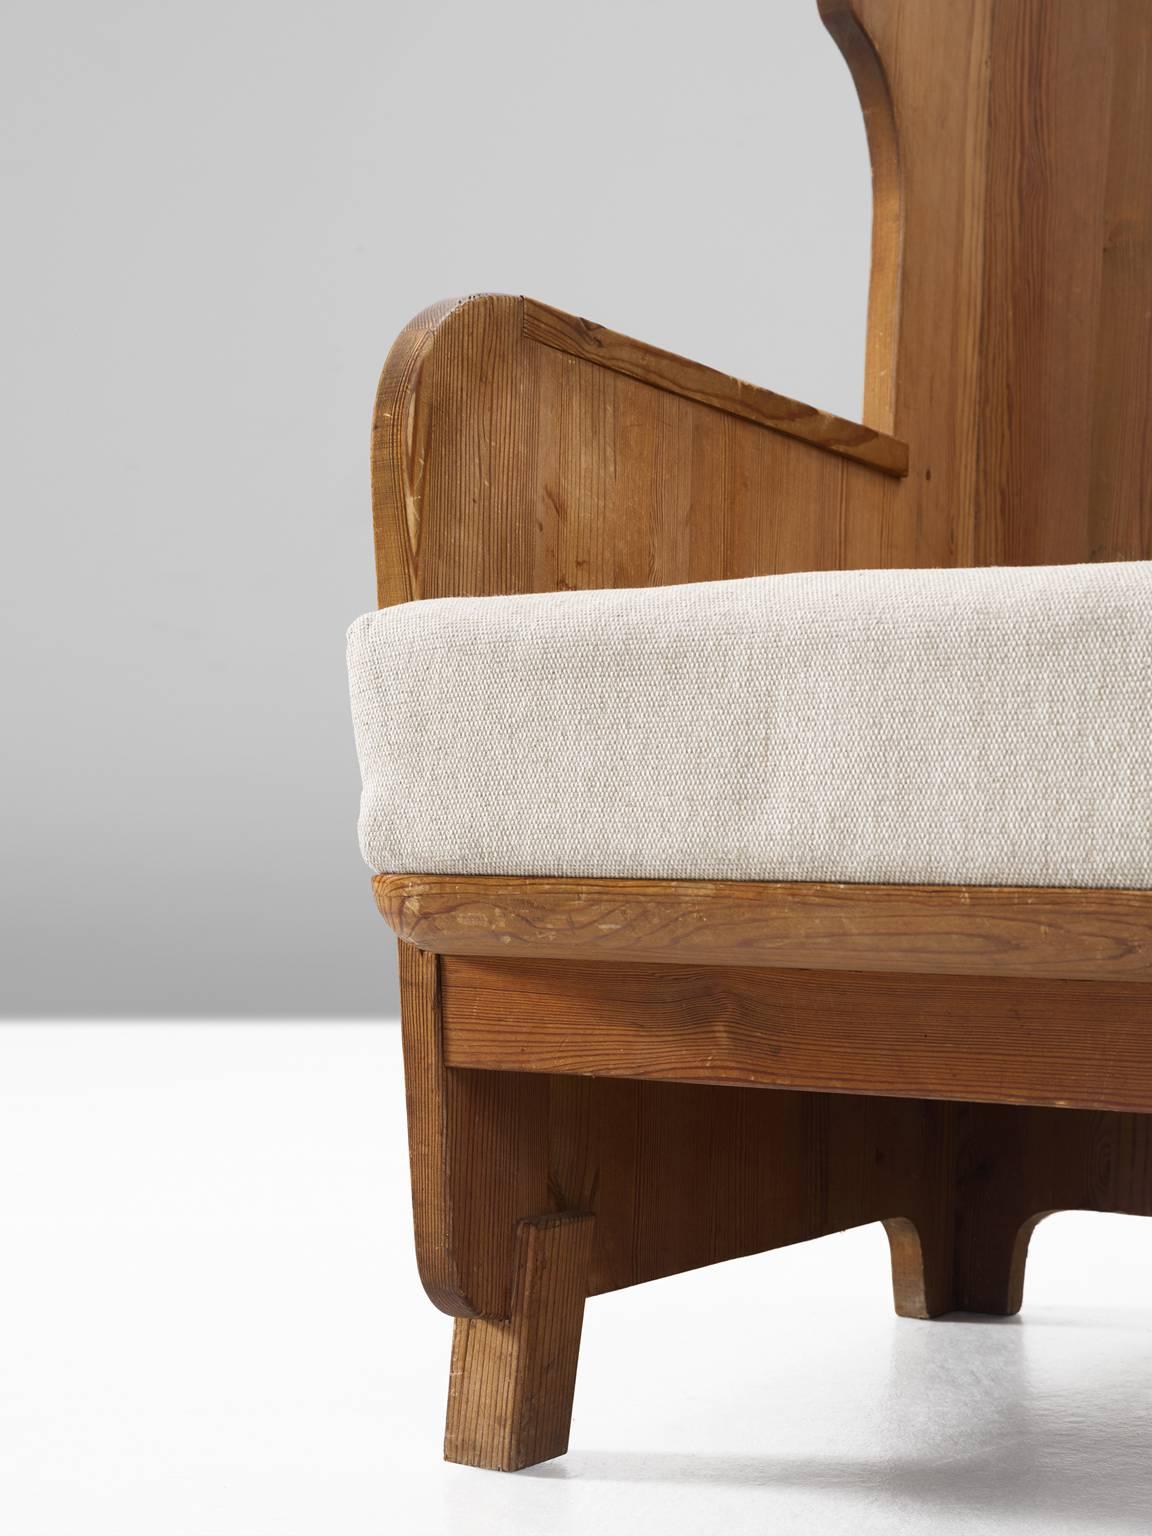 Fabric Axel Einar Hjorth 'Lovö' High Back Chair in Solid Pine